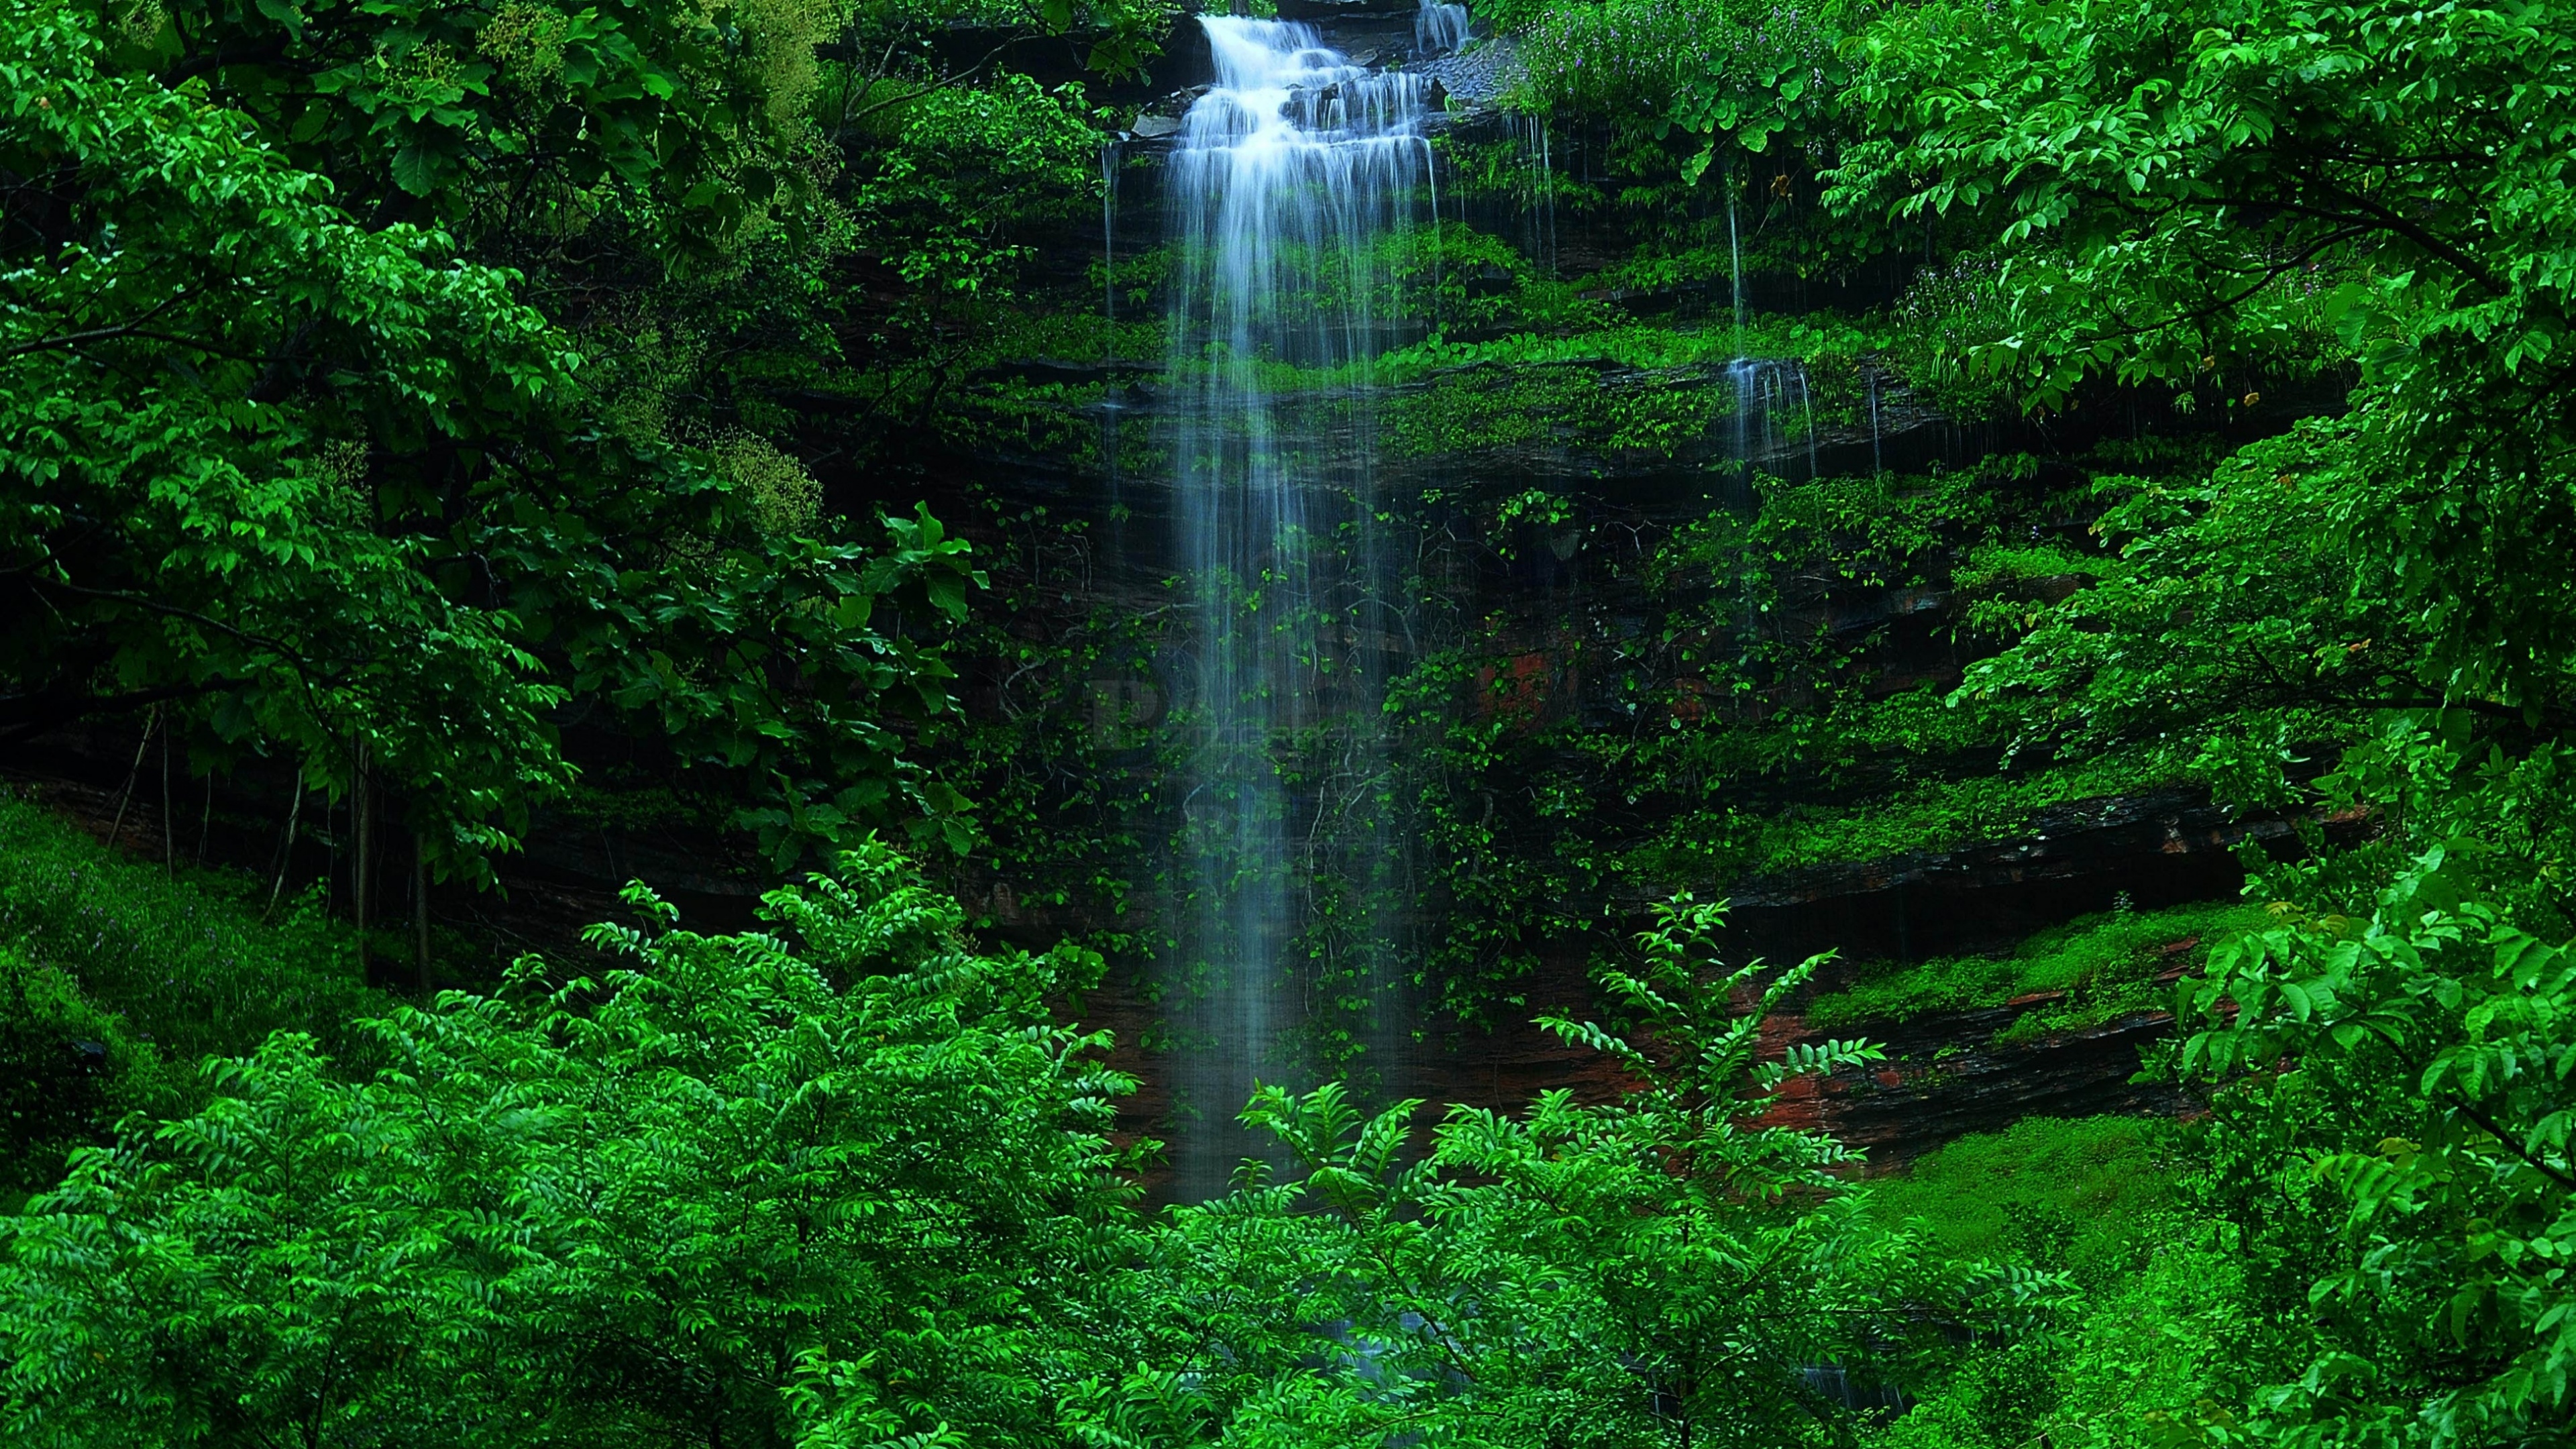 Обои на телефон живой водопад. Водопад в лесу. Лесной водопад. Живая природа водопады. Водопад зелень.